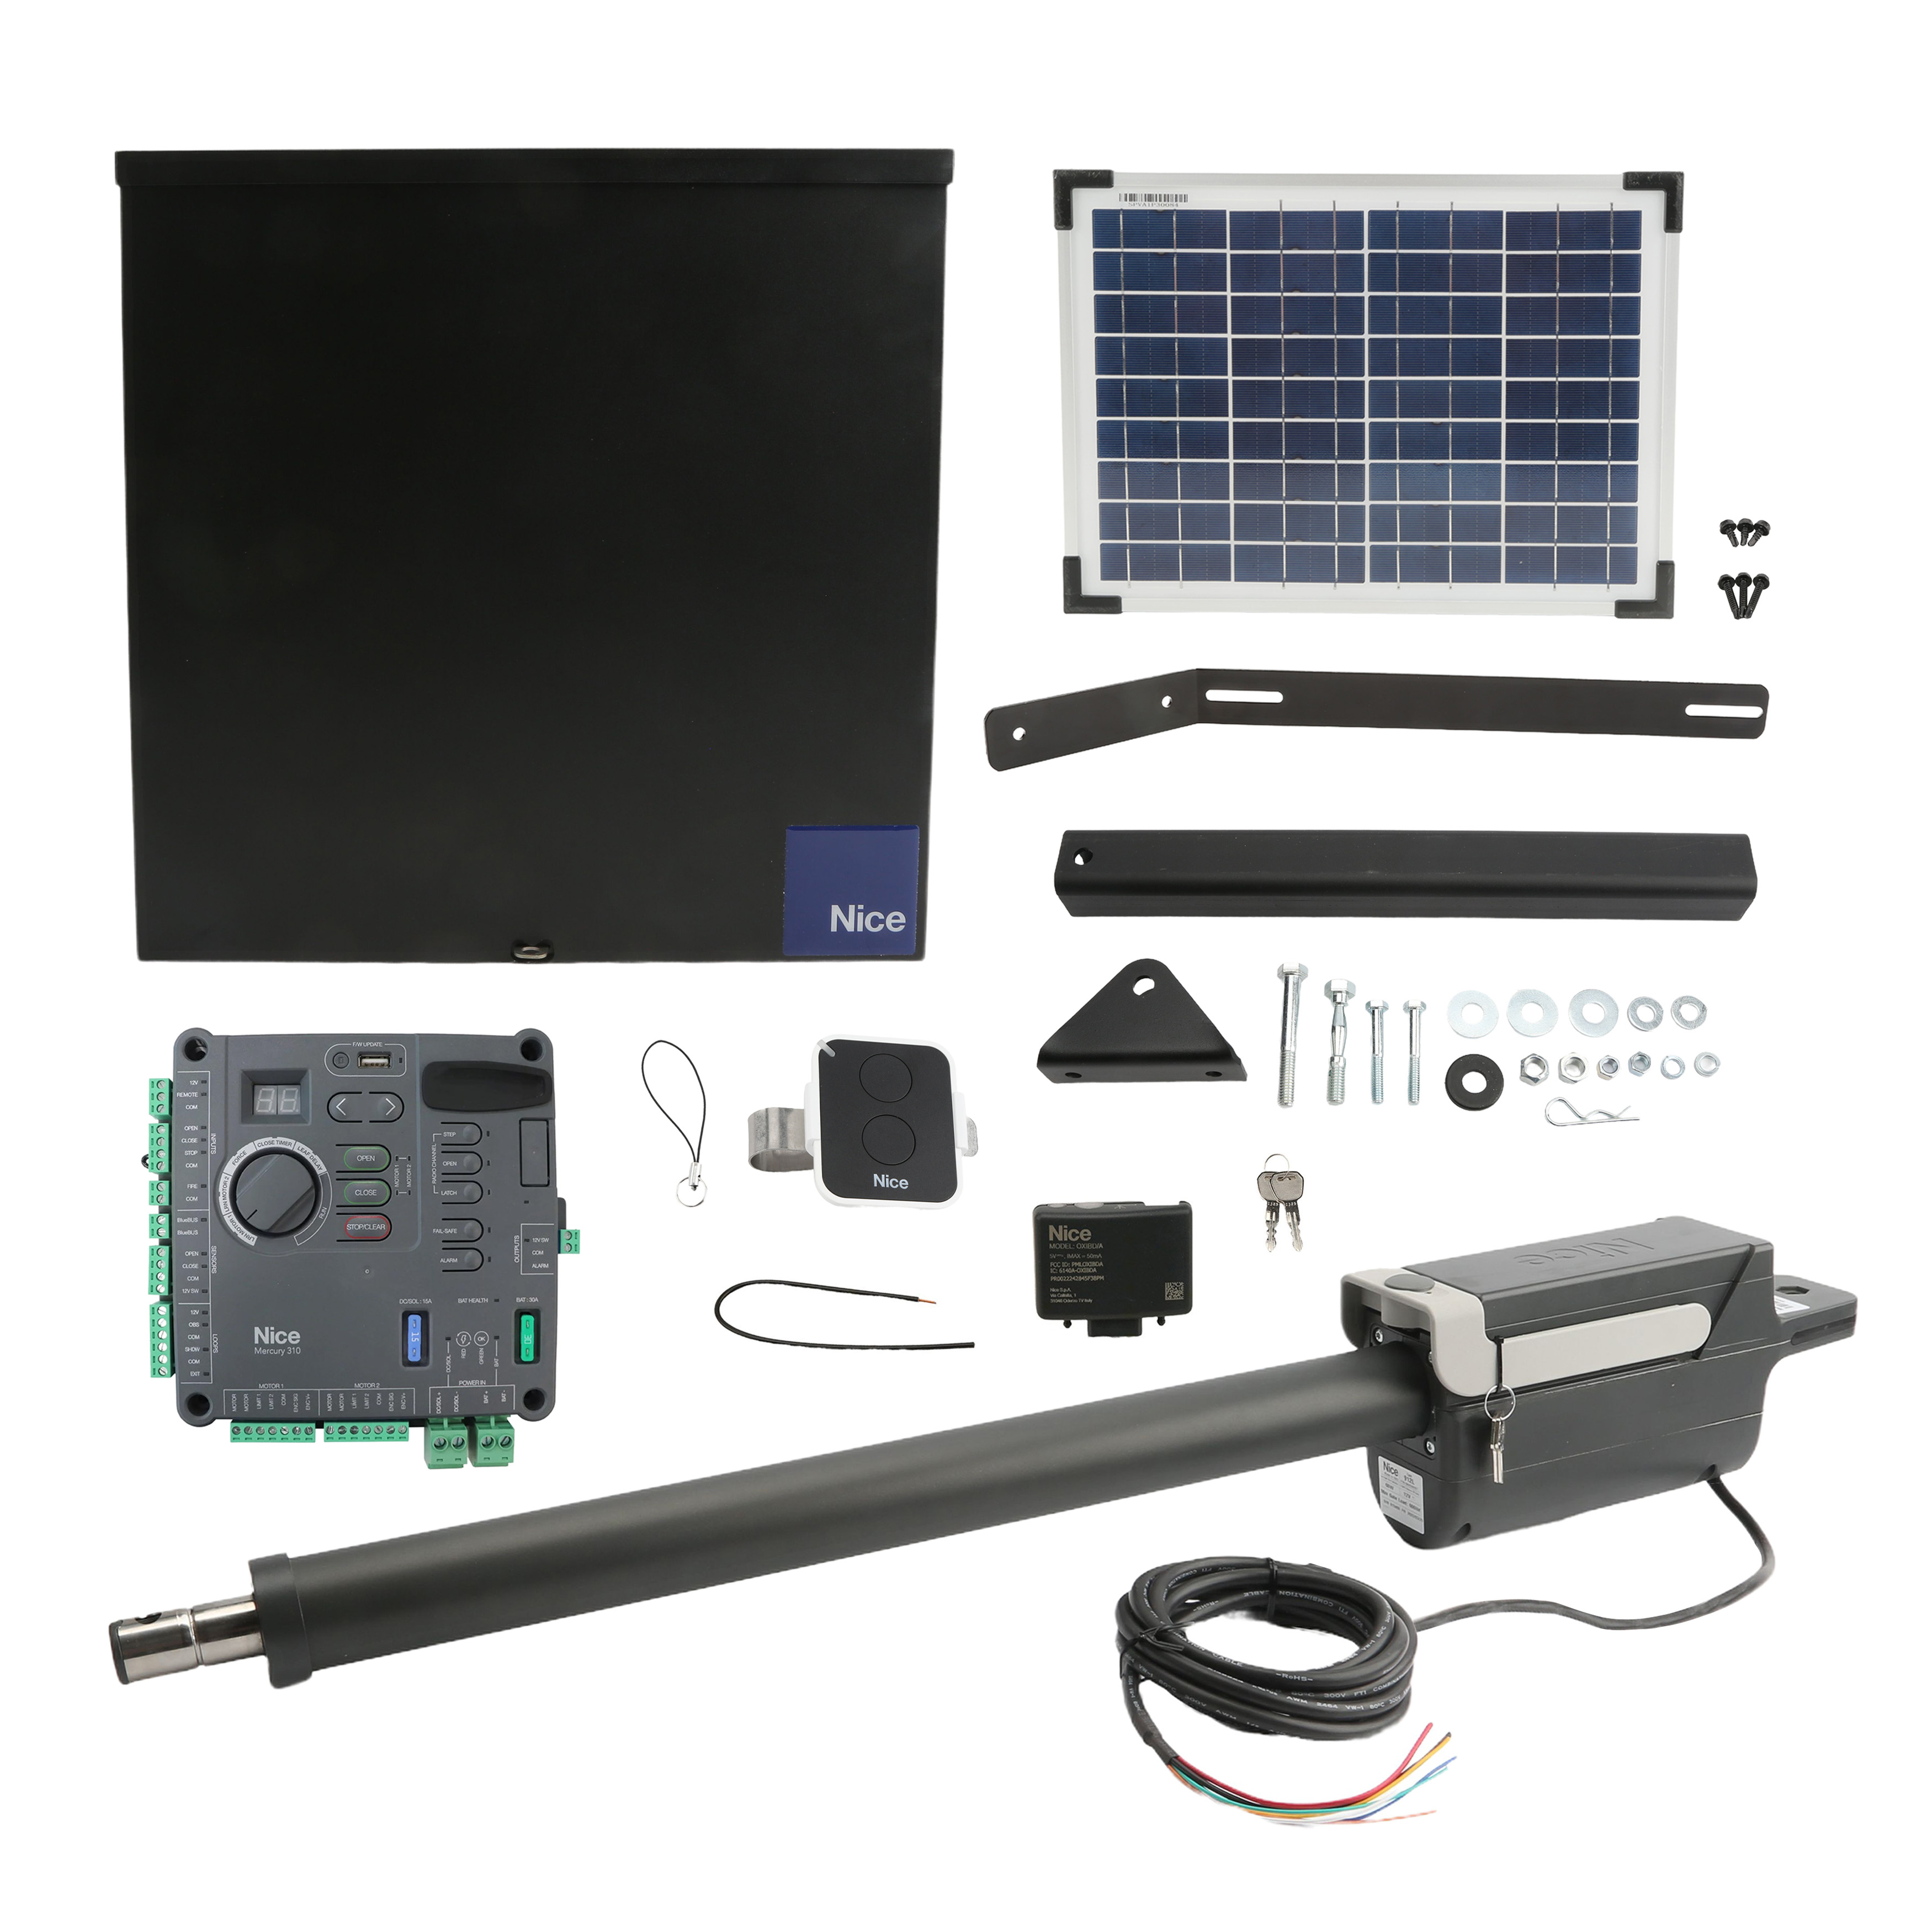 https://apollogateopeners.com/store/nice-apollo-310titan-10s-swing-gate-opener-solar-package-w-10-watt-solar-panel.html